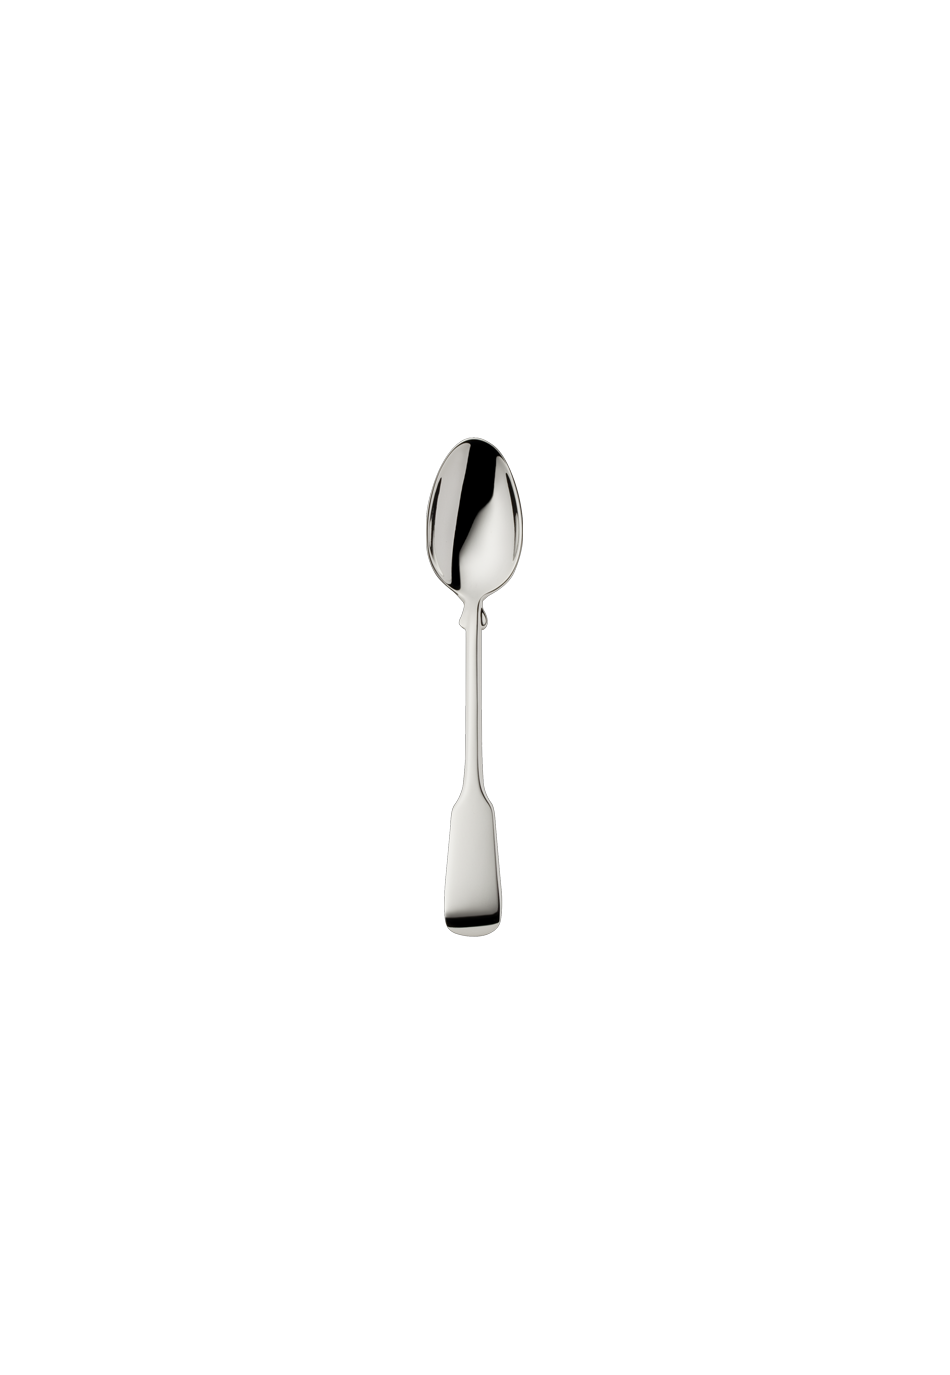 Spaten Mocha Spoon 10,5 Cm (150g massive silverplated)